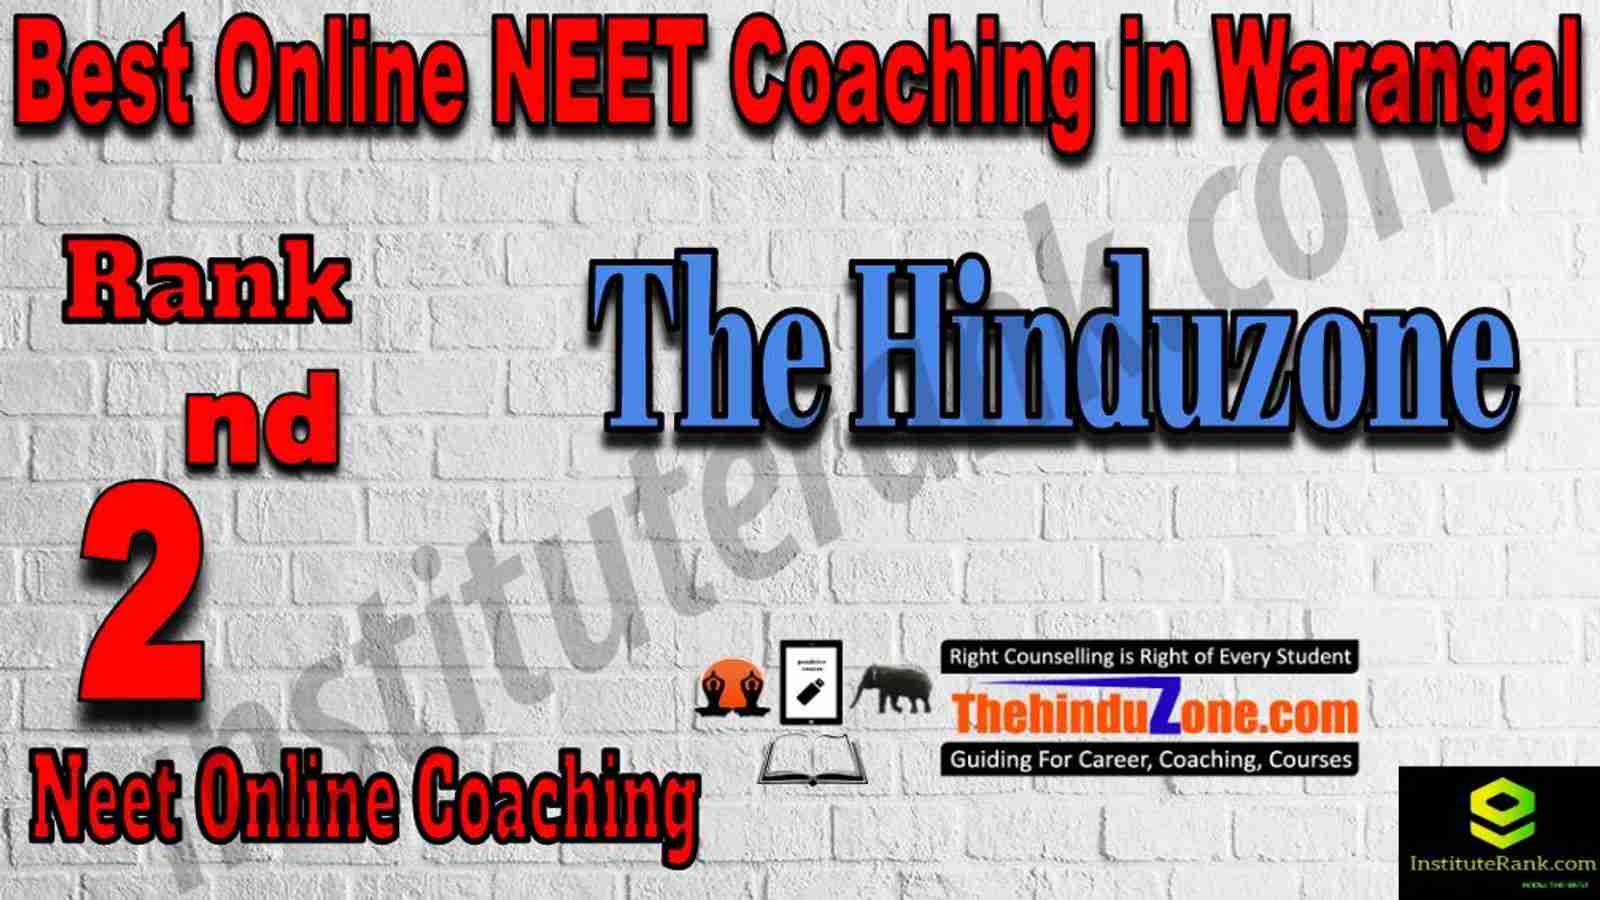 2nd Best Online Neet Coaching in Warangal